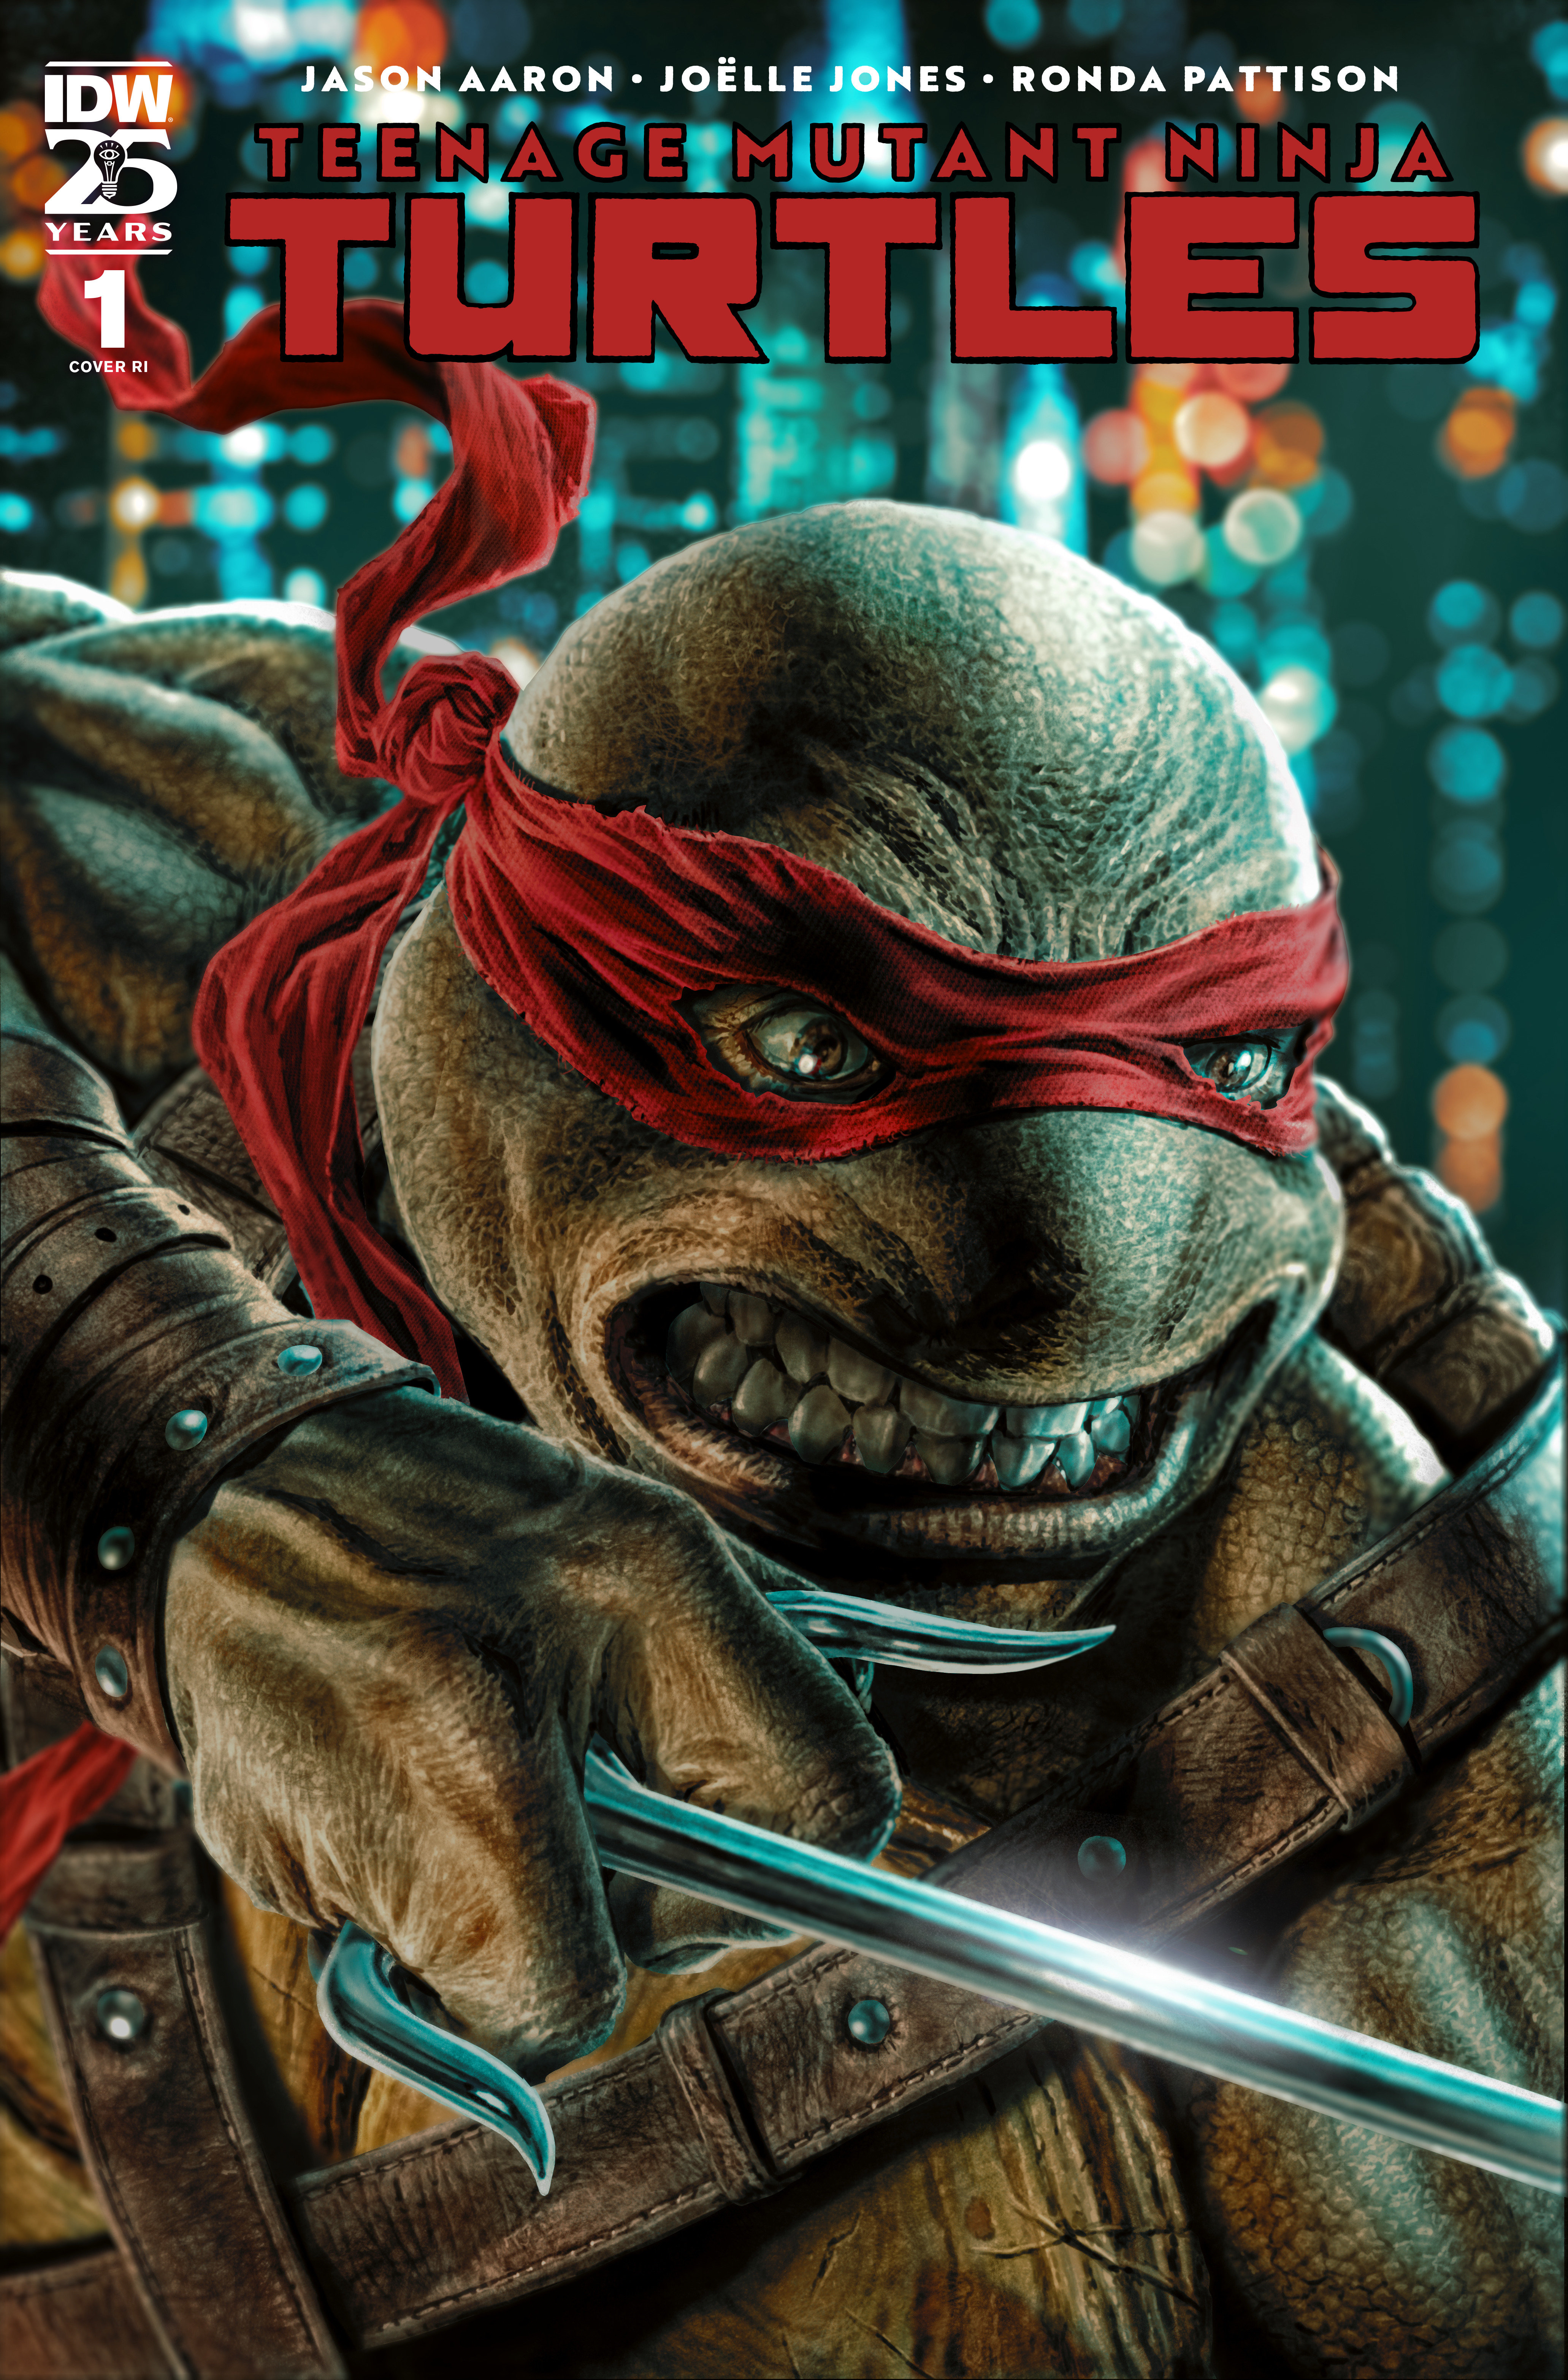 Teenage Mutant Ninja Turtles #1 Cover Bermejo 1 for 75 Variant